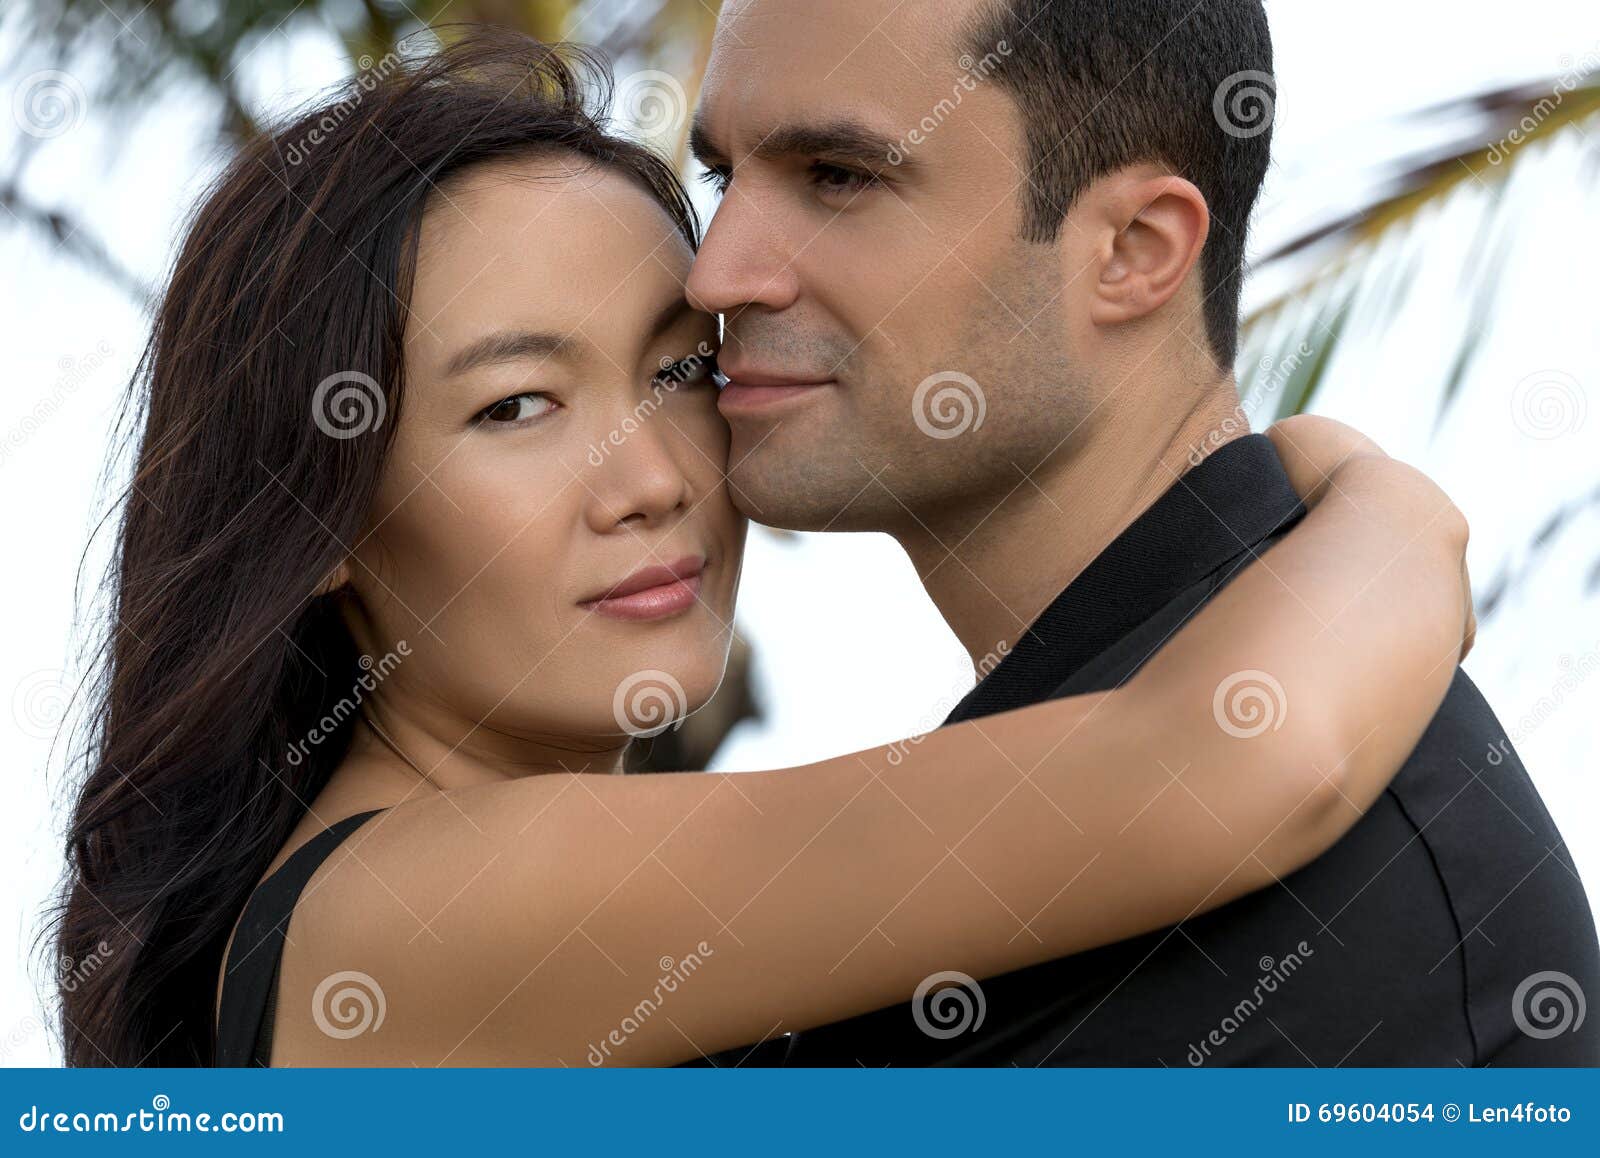 Interracial Heterosexual Sensual Couple Stock Photos pic